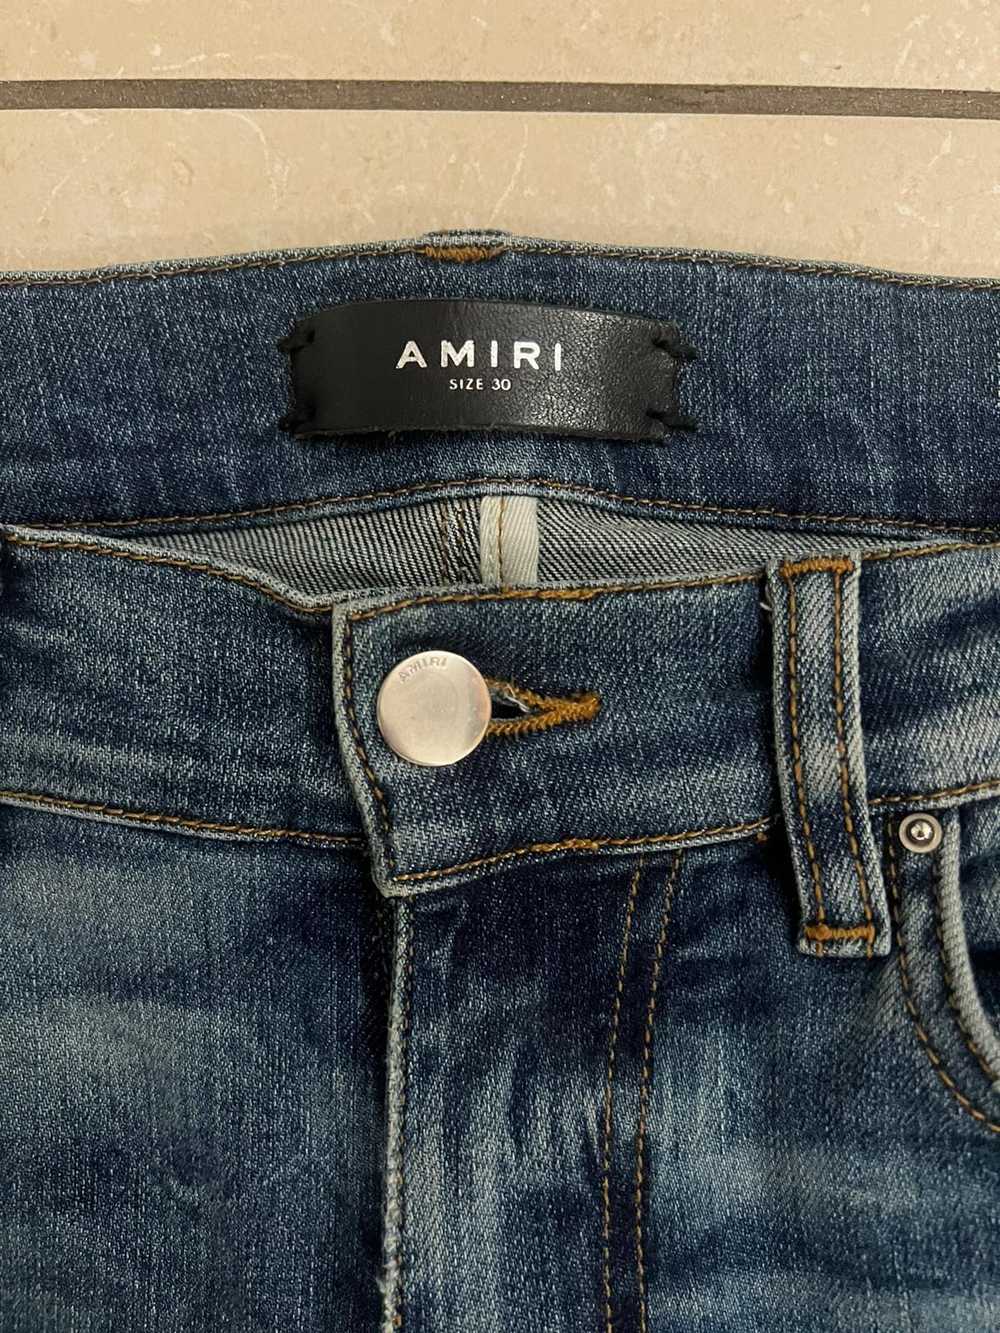 Amiri Amiri Mx1 leather Patch jeans - image 3